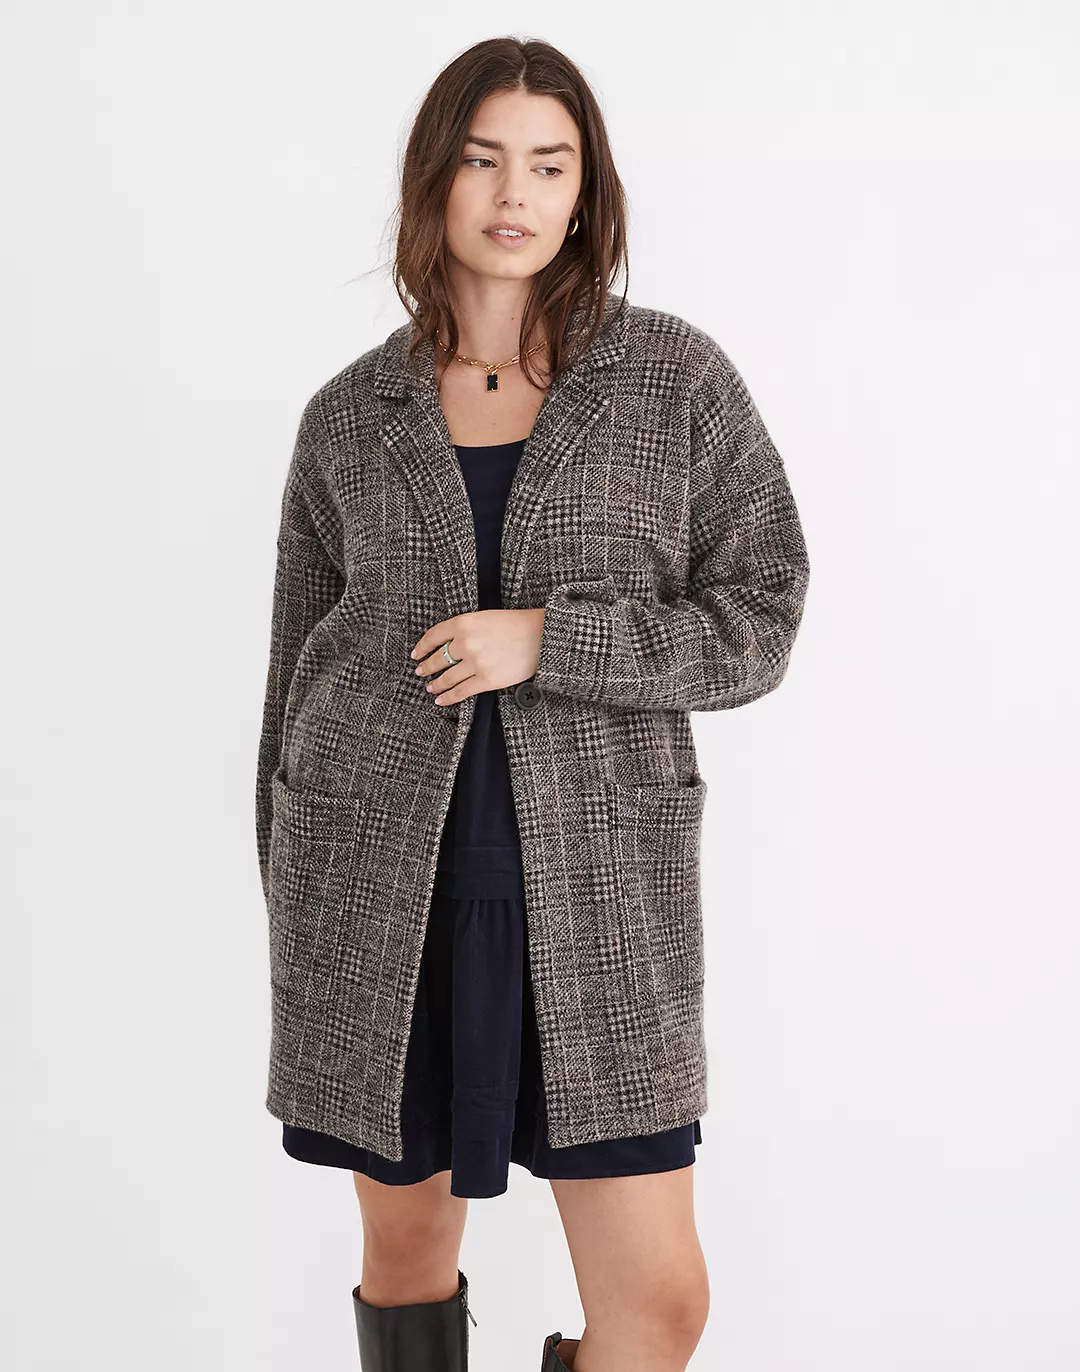 Topshop meg zip coat, Petite Friendly Camel Coat, Chunky Knit Sweaters